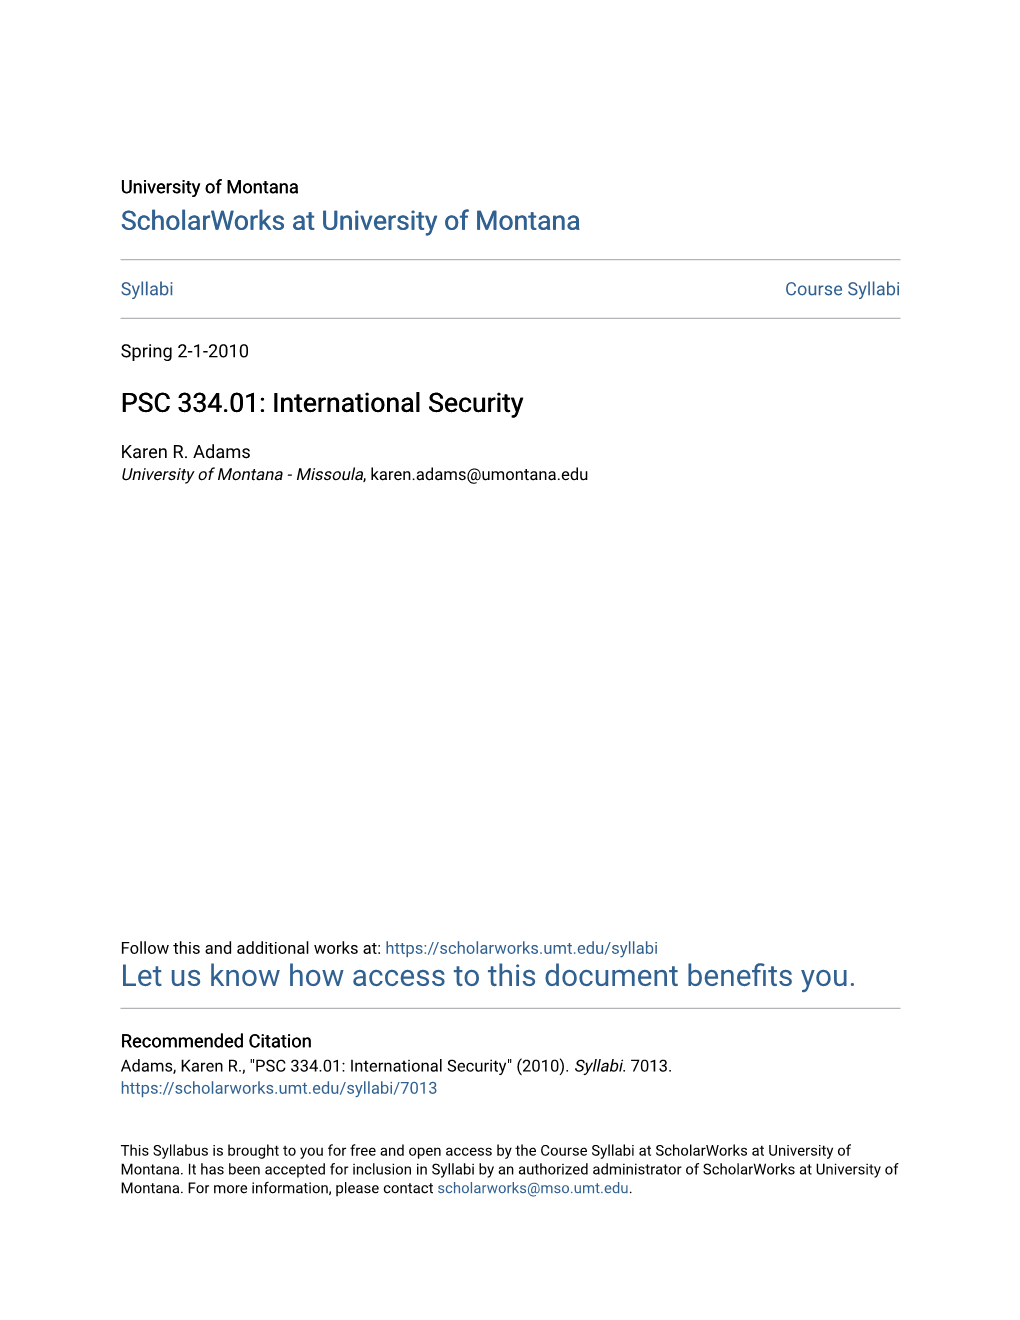 PSC 334.01: International Security